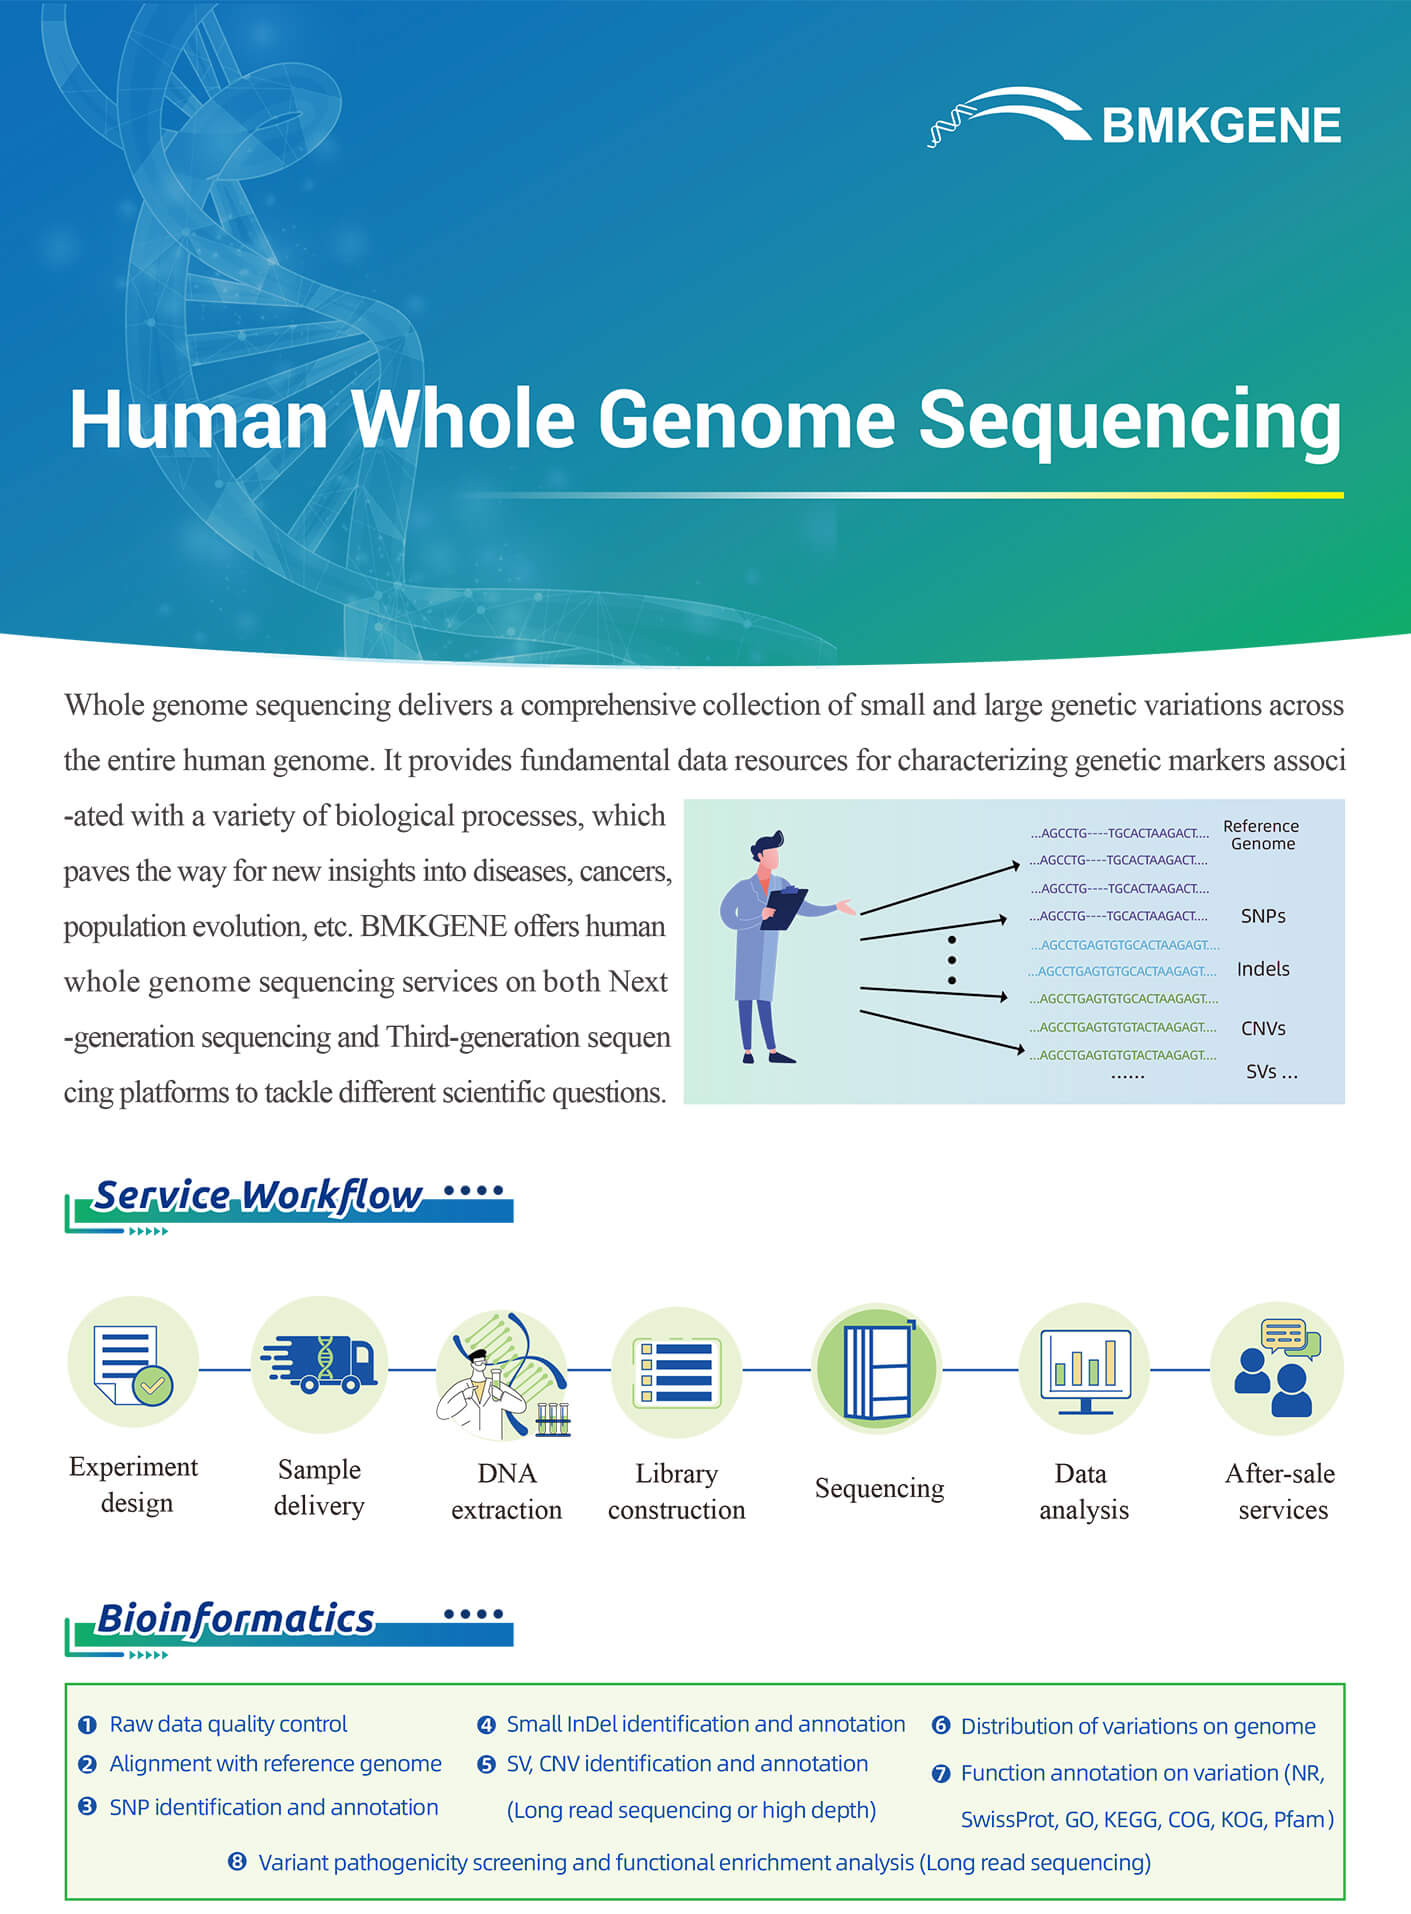 http://www.bmkgene.com/uploads/Human-Whole-Genome-Sequencing-hWGS-BMKGENE-2311.pdf